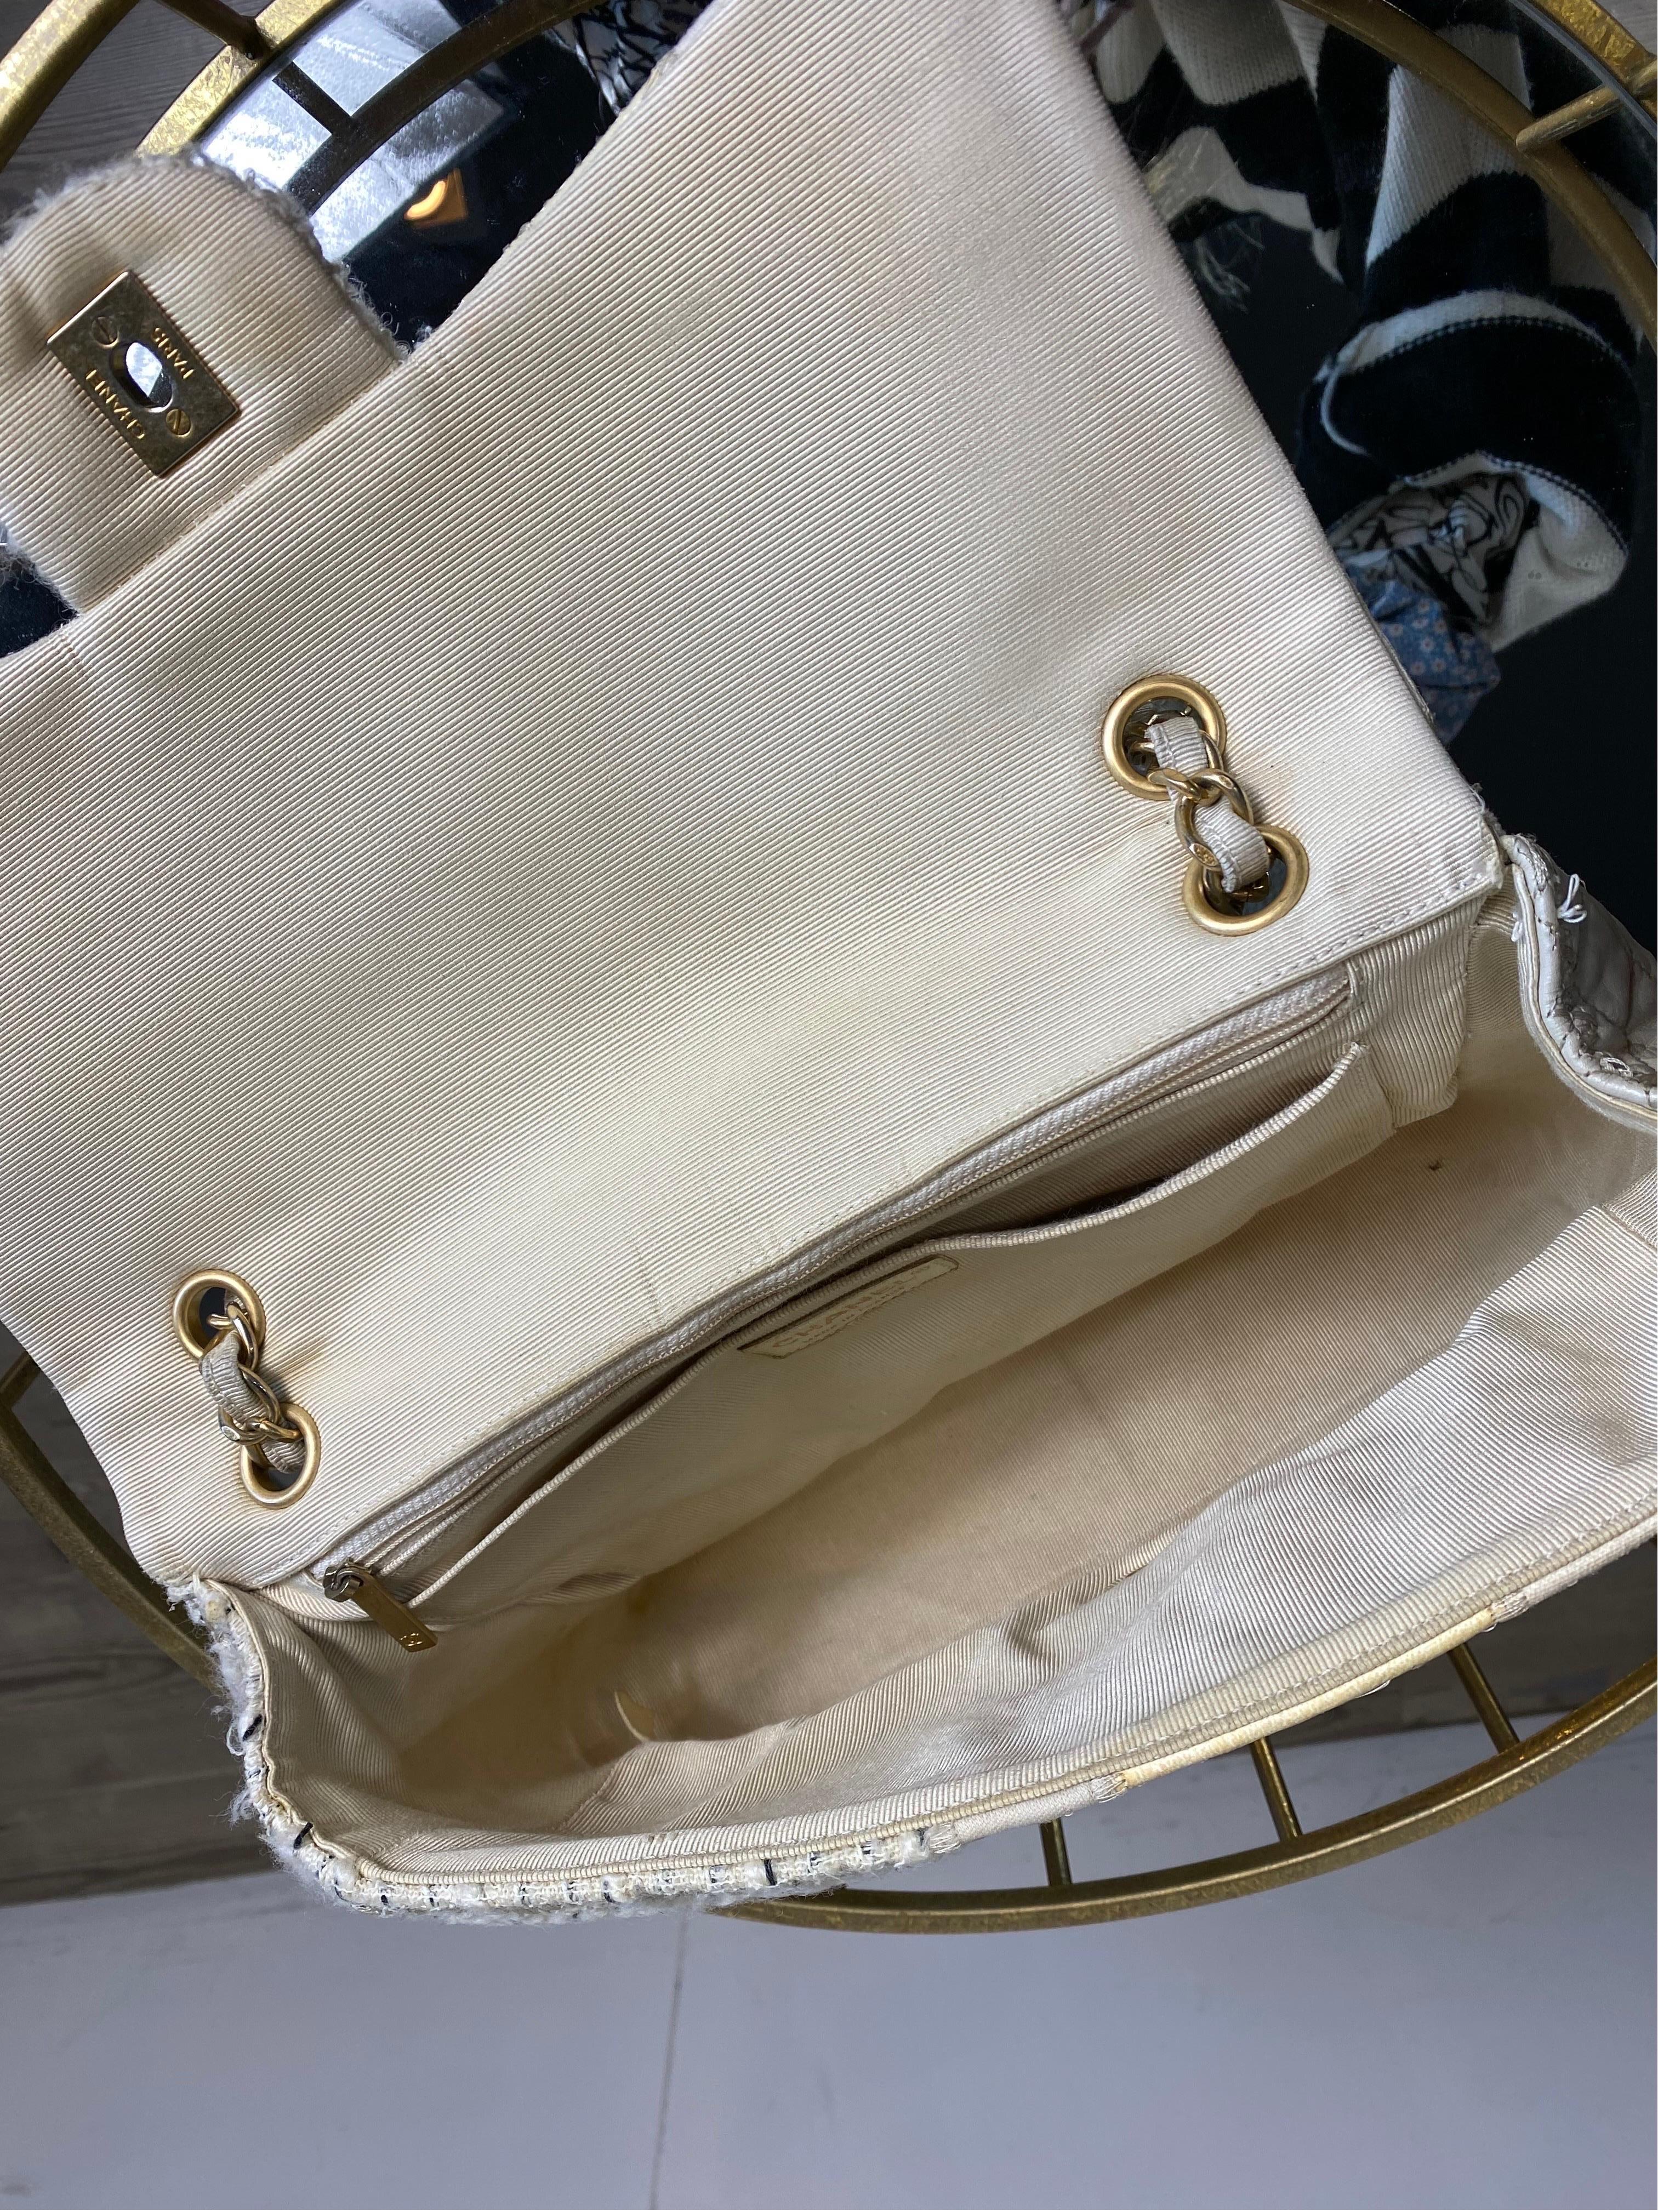 Chanel Jumbo Limited Edition Patchwork Bag en vente 9